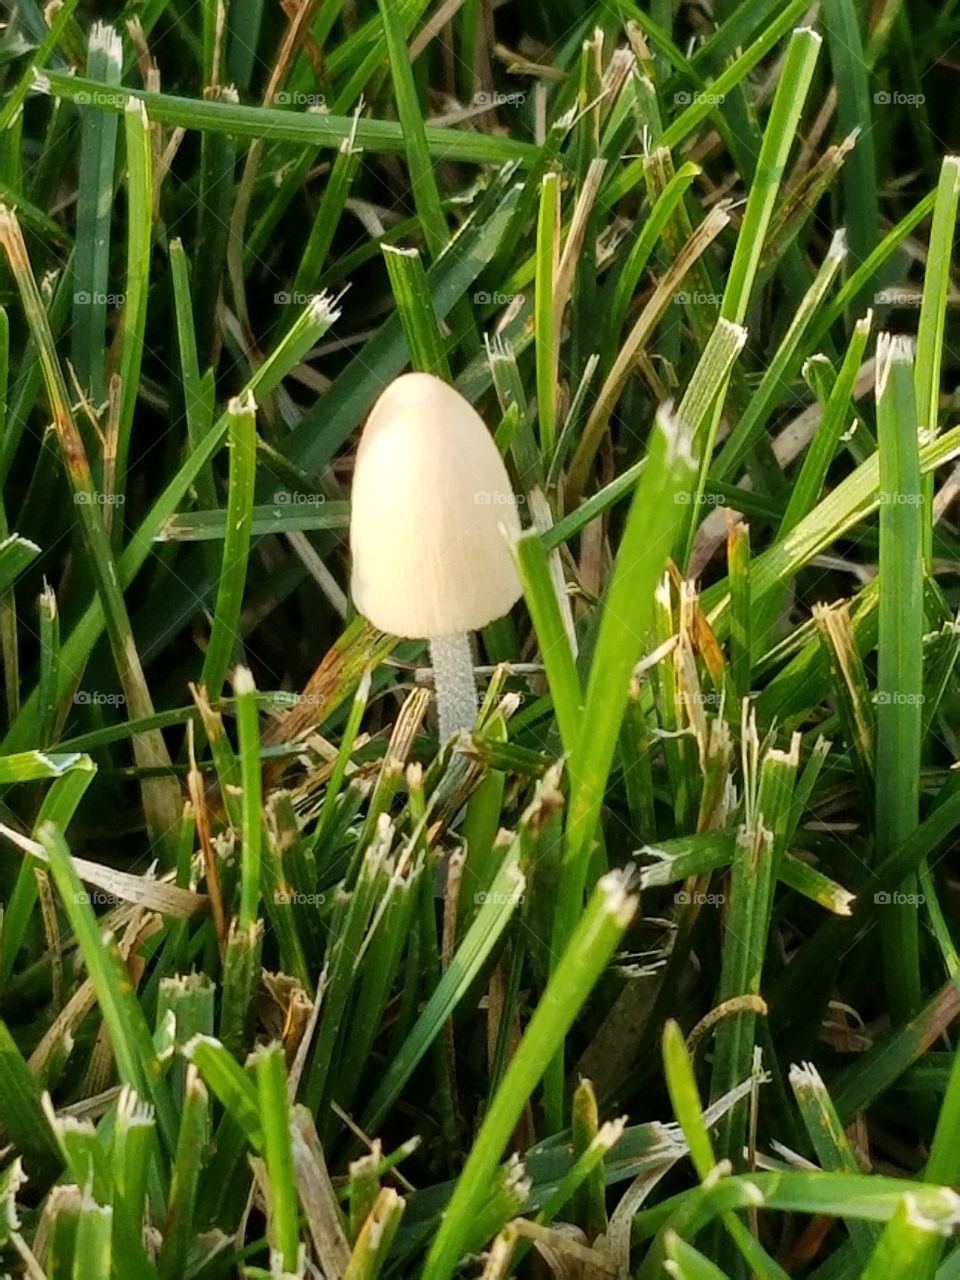 fungi or mushroom in lawn